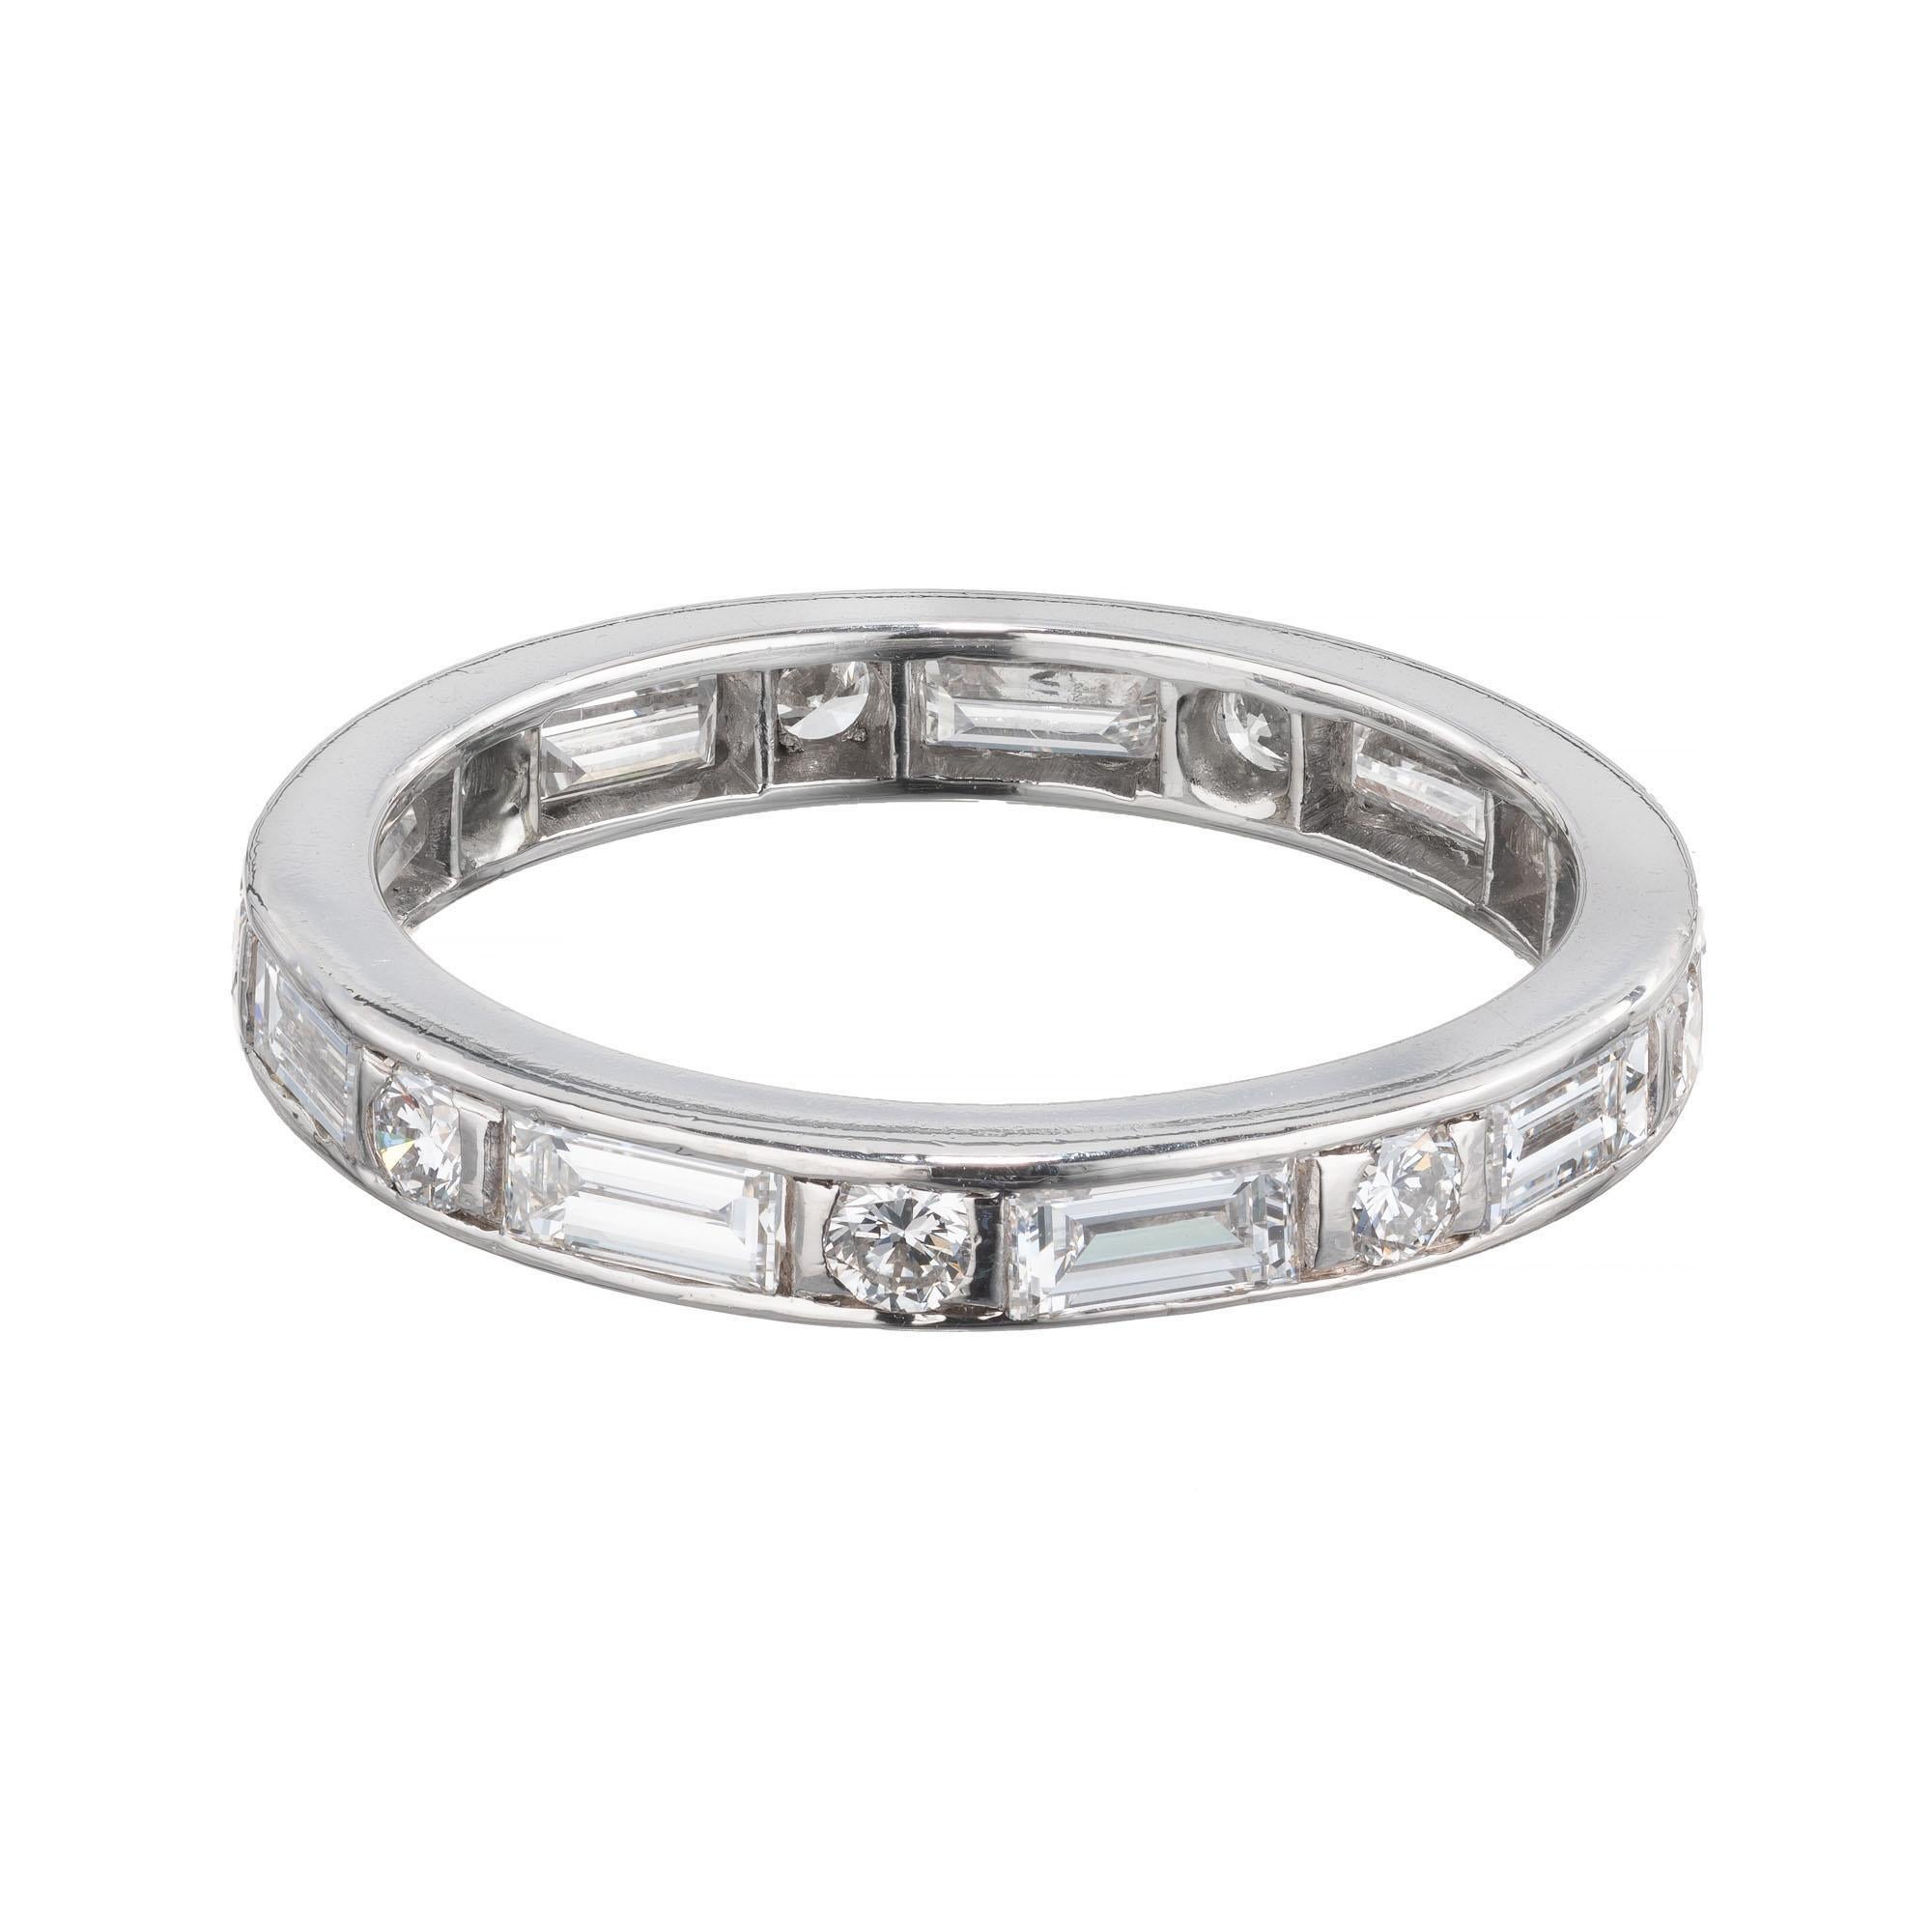 Baguette Cut 1.27 Carat Diamond Platinum Wedding Band Ring